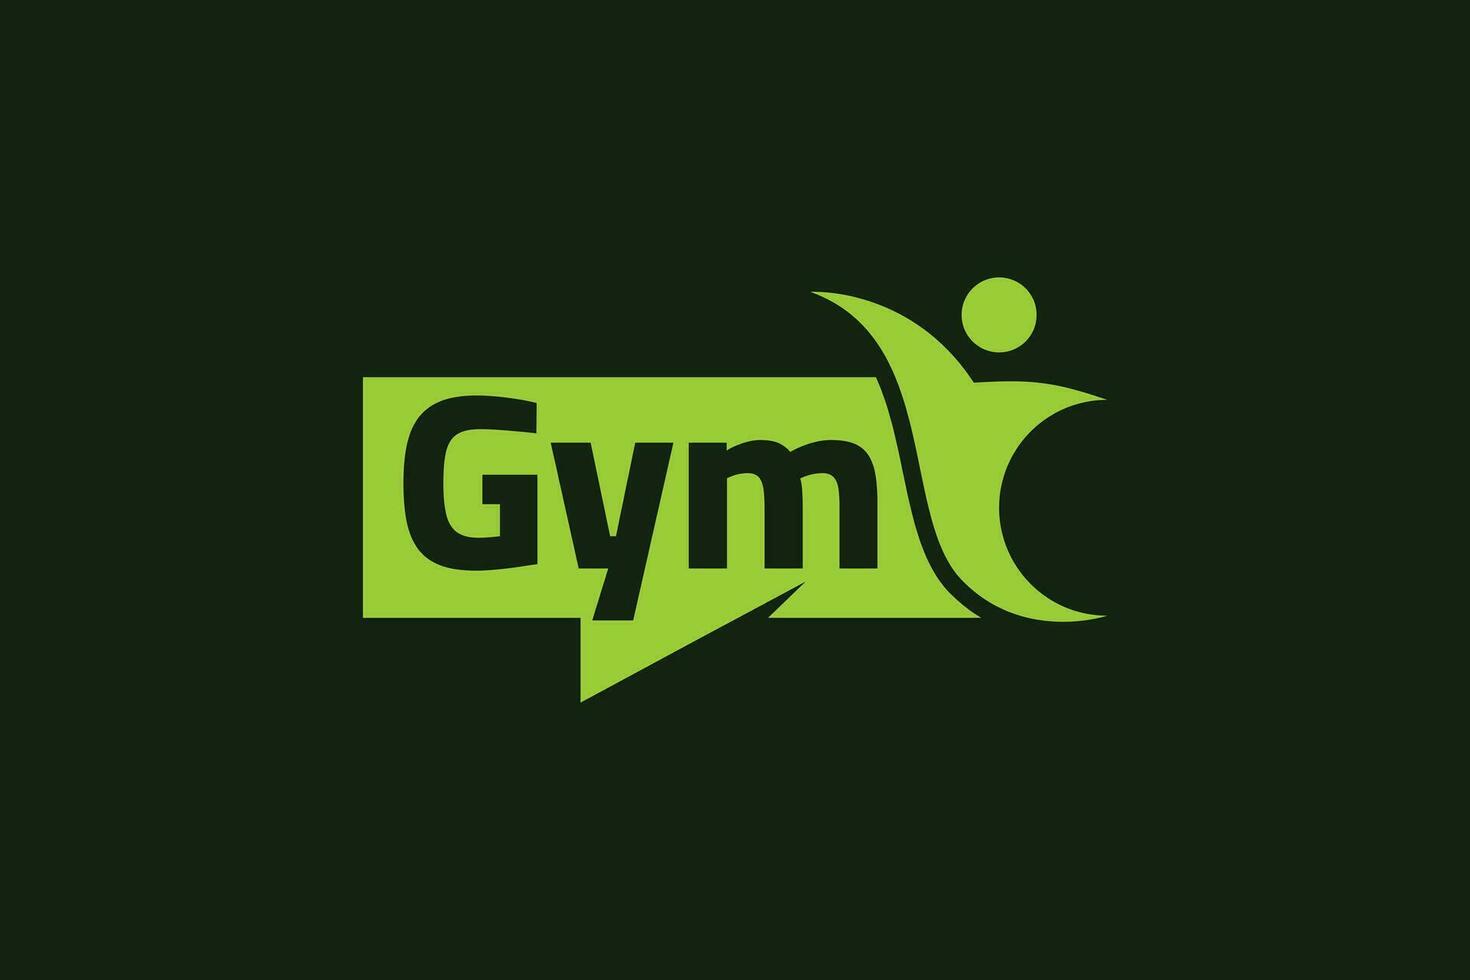 Gym Eco green leaf man logo design vector template